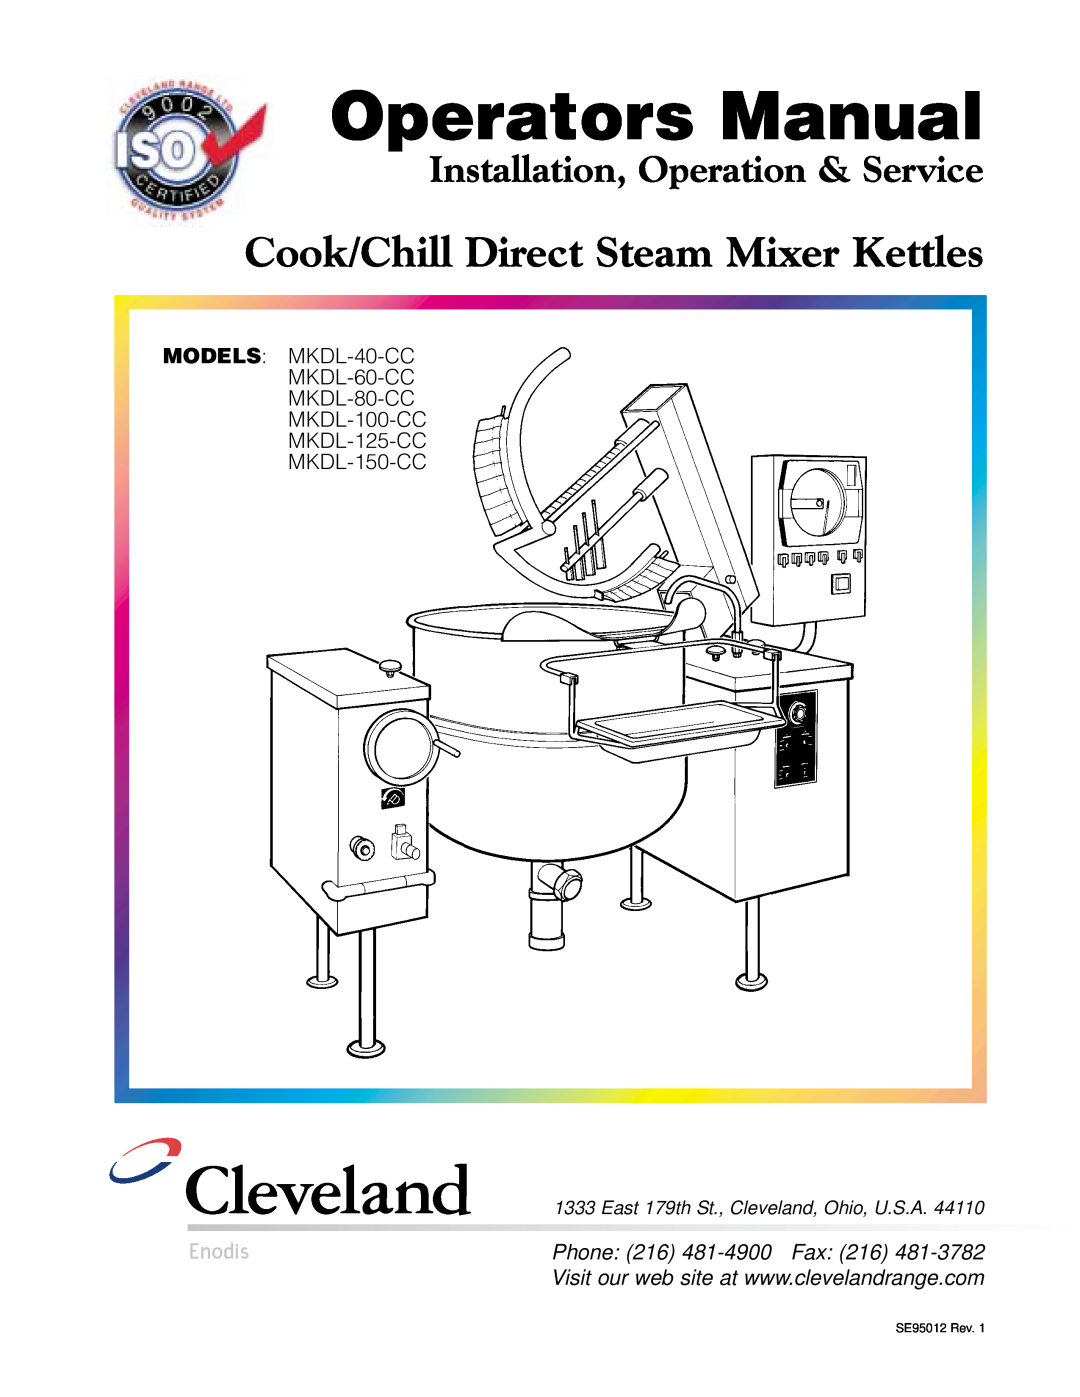 Cleveland Range manual MODELS MKDL-40-CC MKDL-60-CC MKDL-80-CC MKDL-100-CC MKDL-125-CC, MKDL-150-CC, Operators Manual 